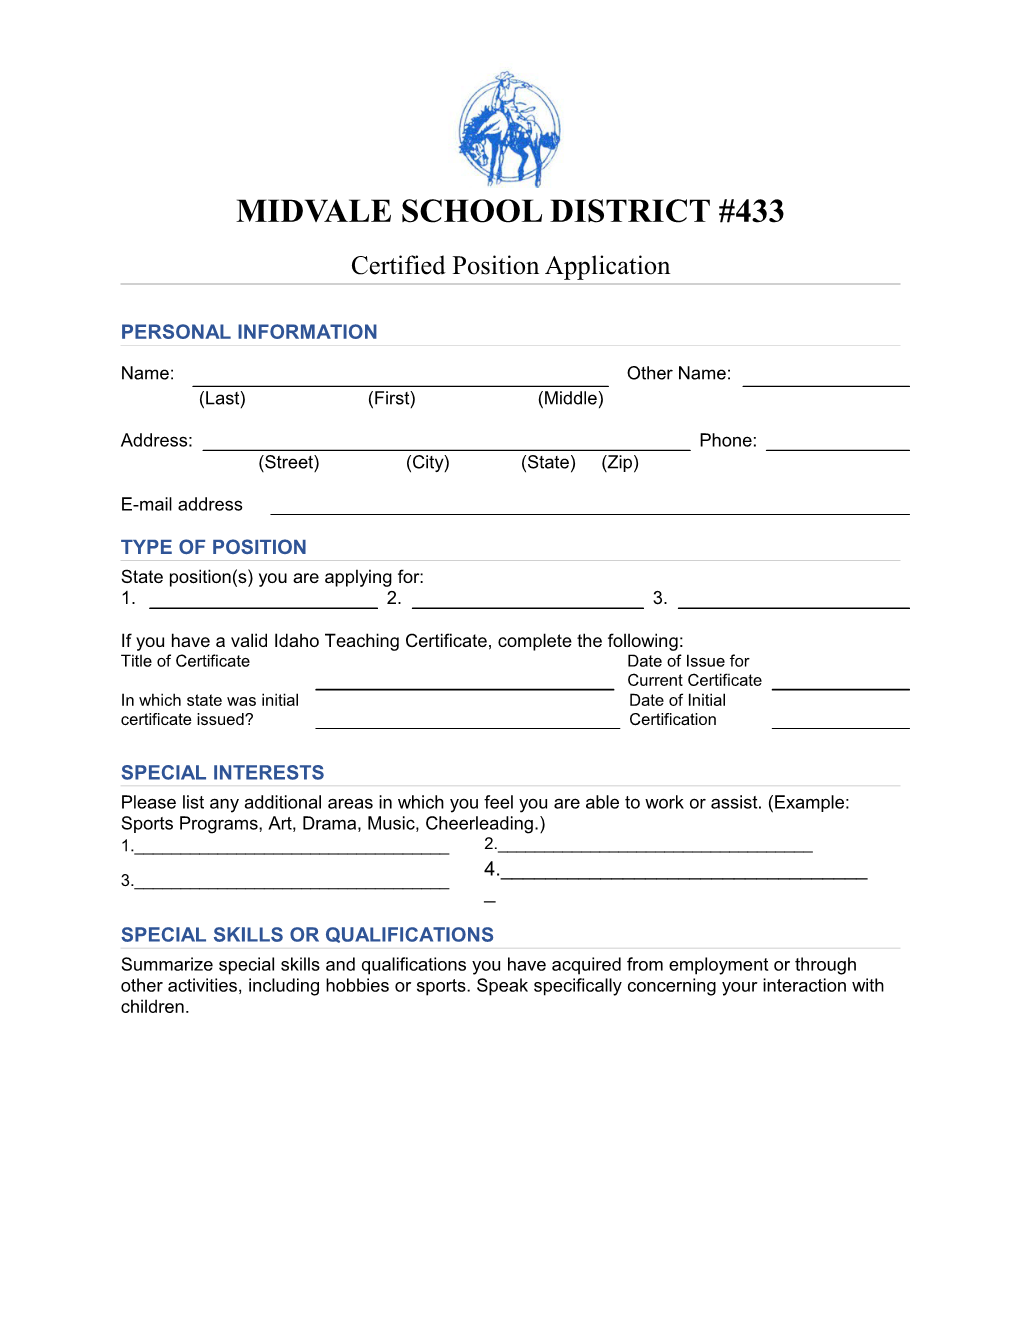 Midvale School District #433